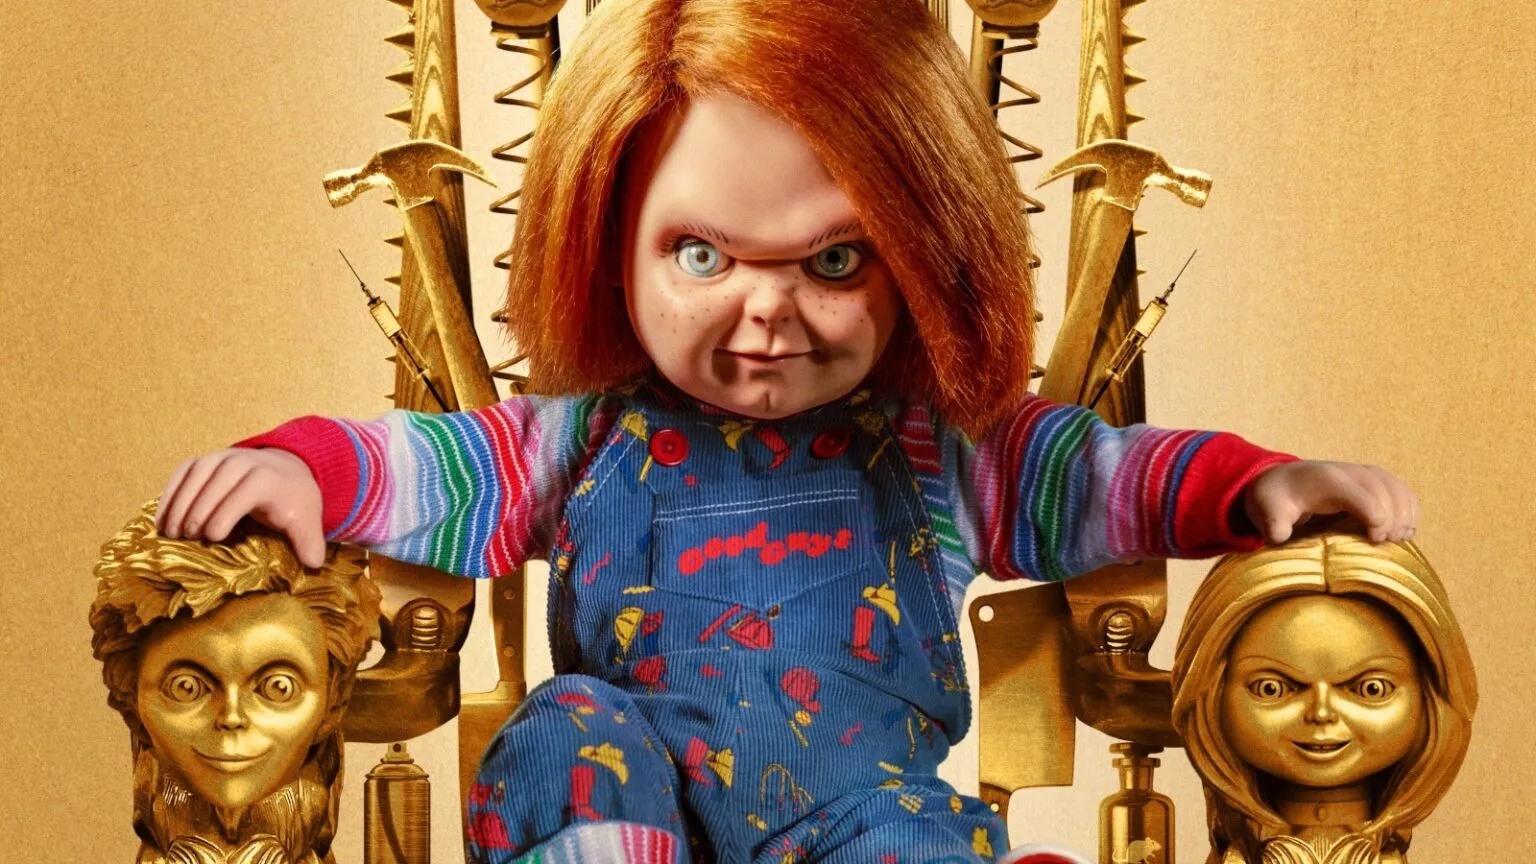 Where to Watch 'Chucky' Season 2?